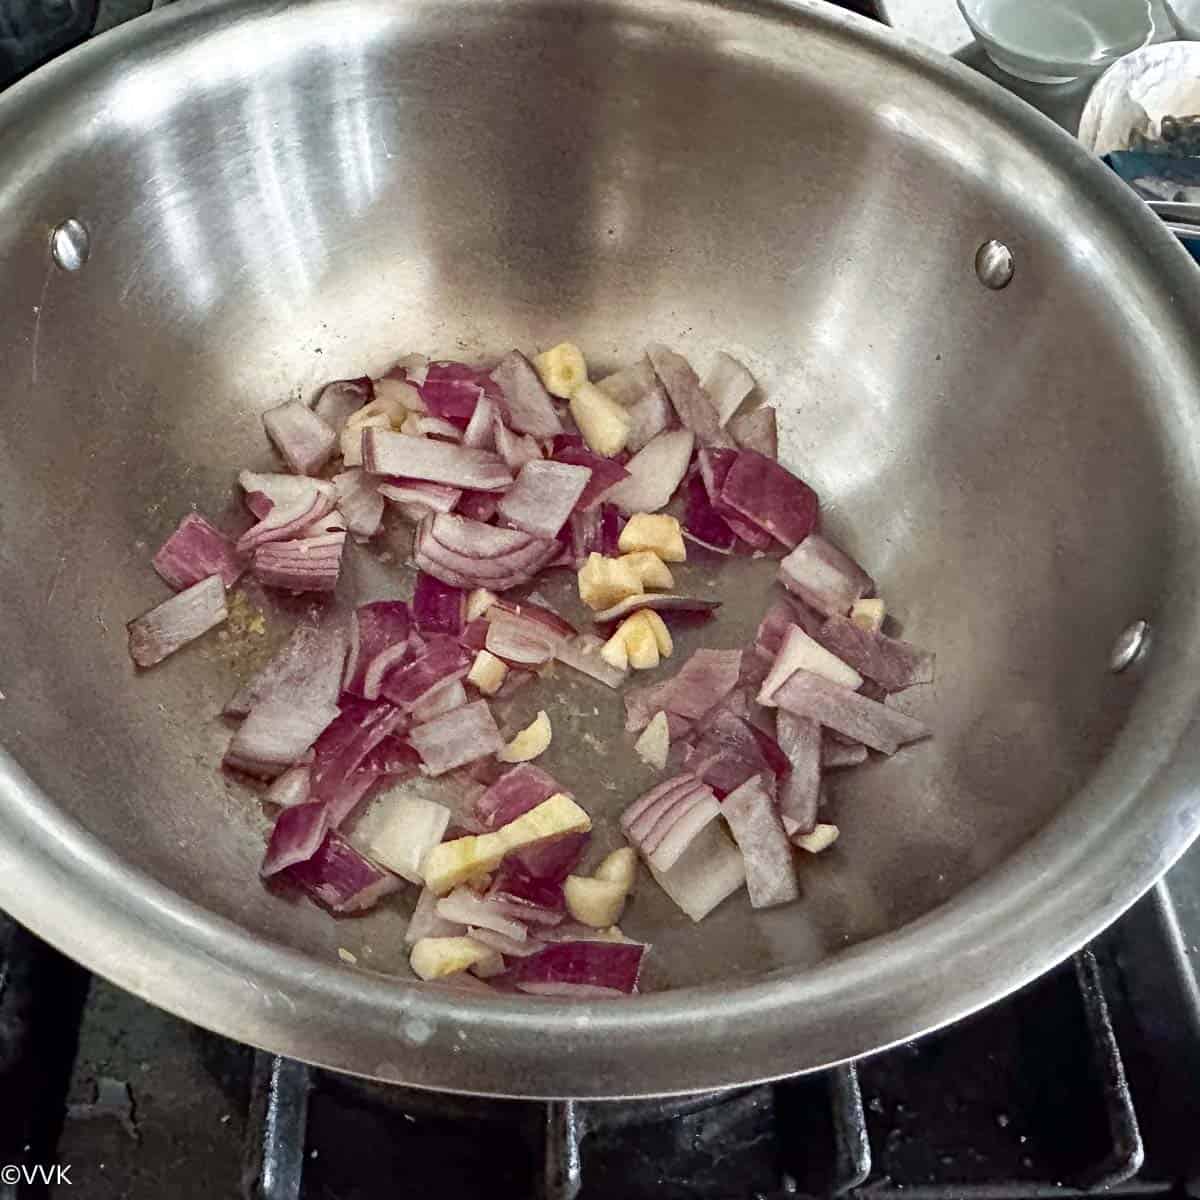 sauteing onion and garlic